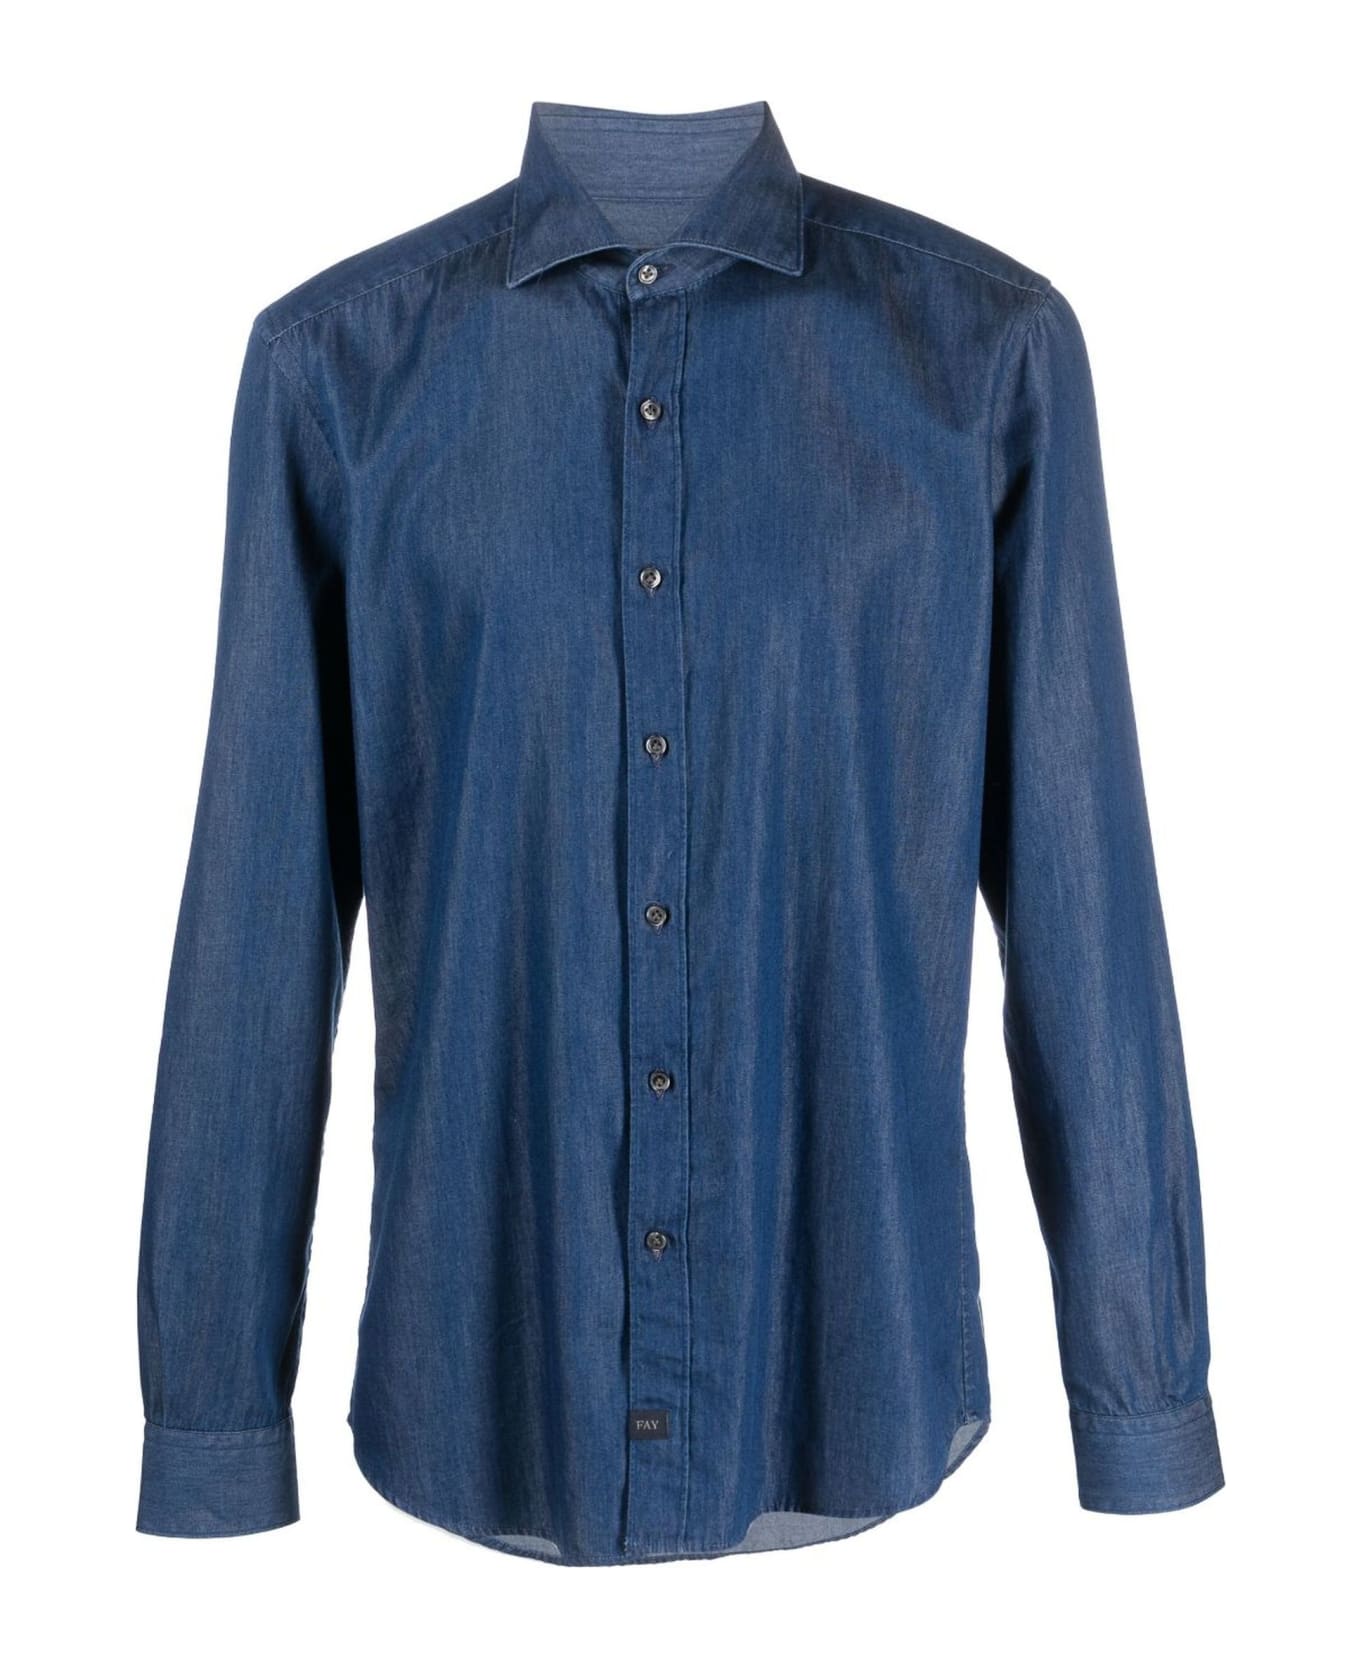 Fay Navy Blue Cotton Denim Shirt - Blue シャツ